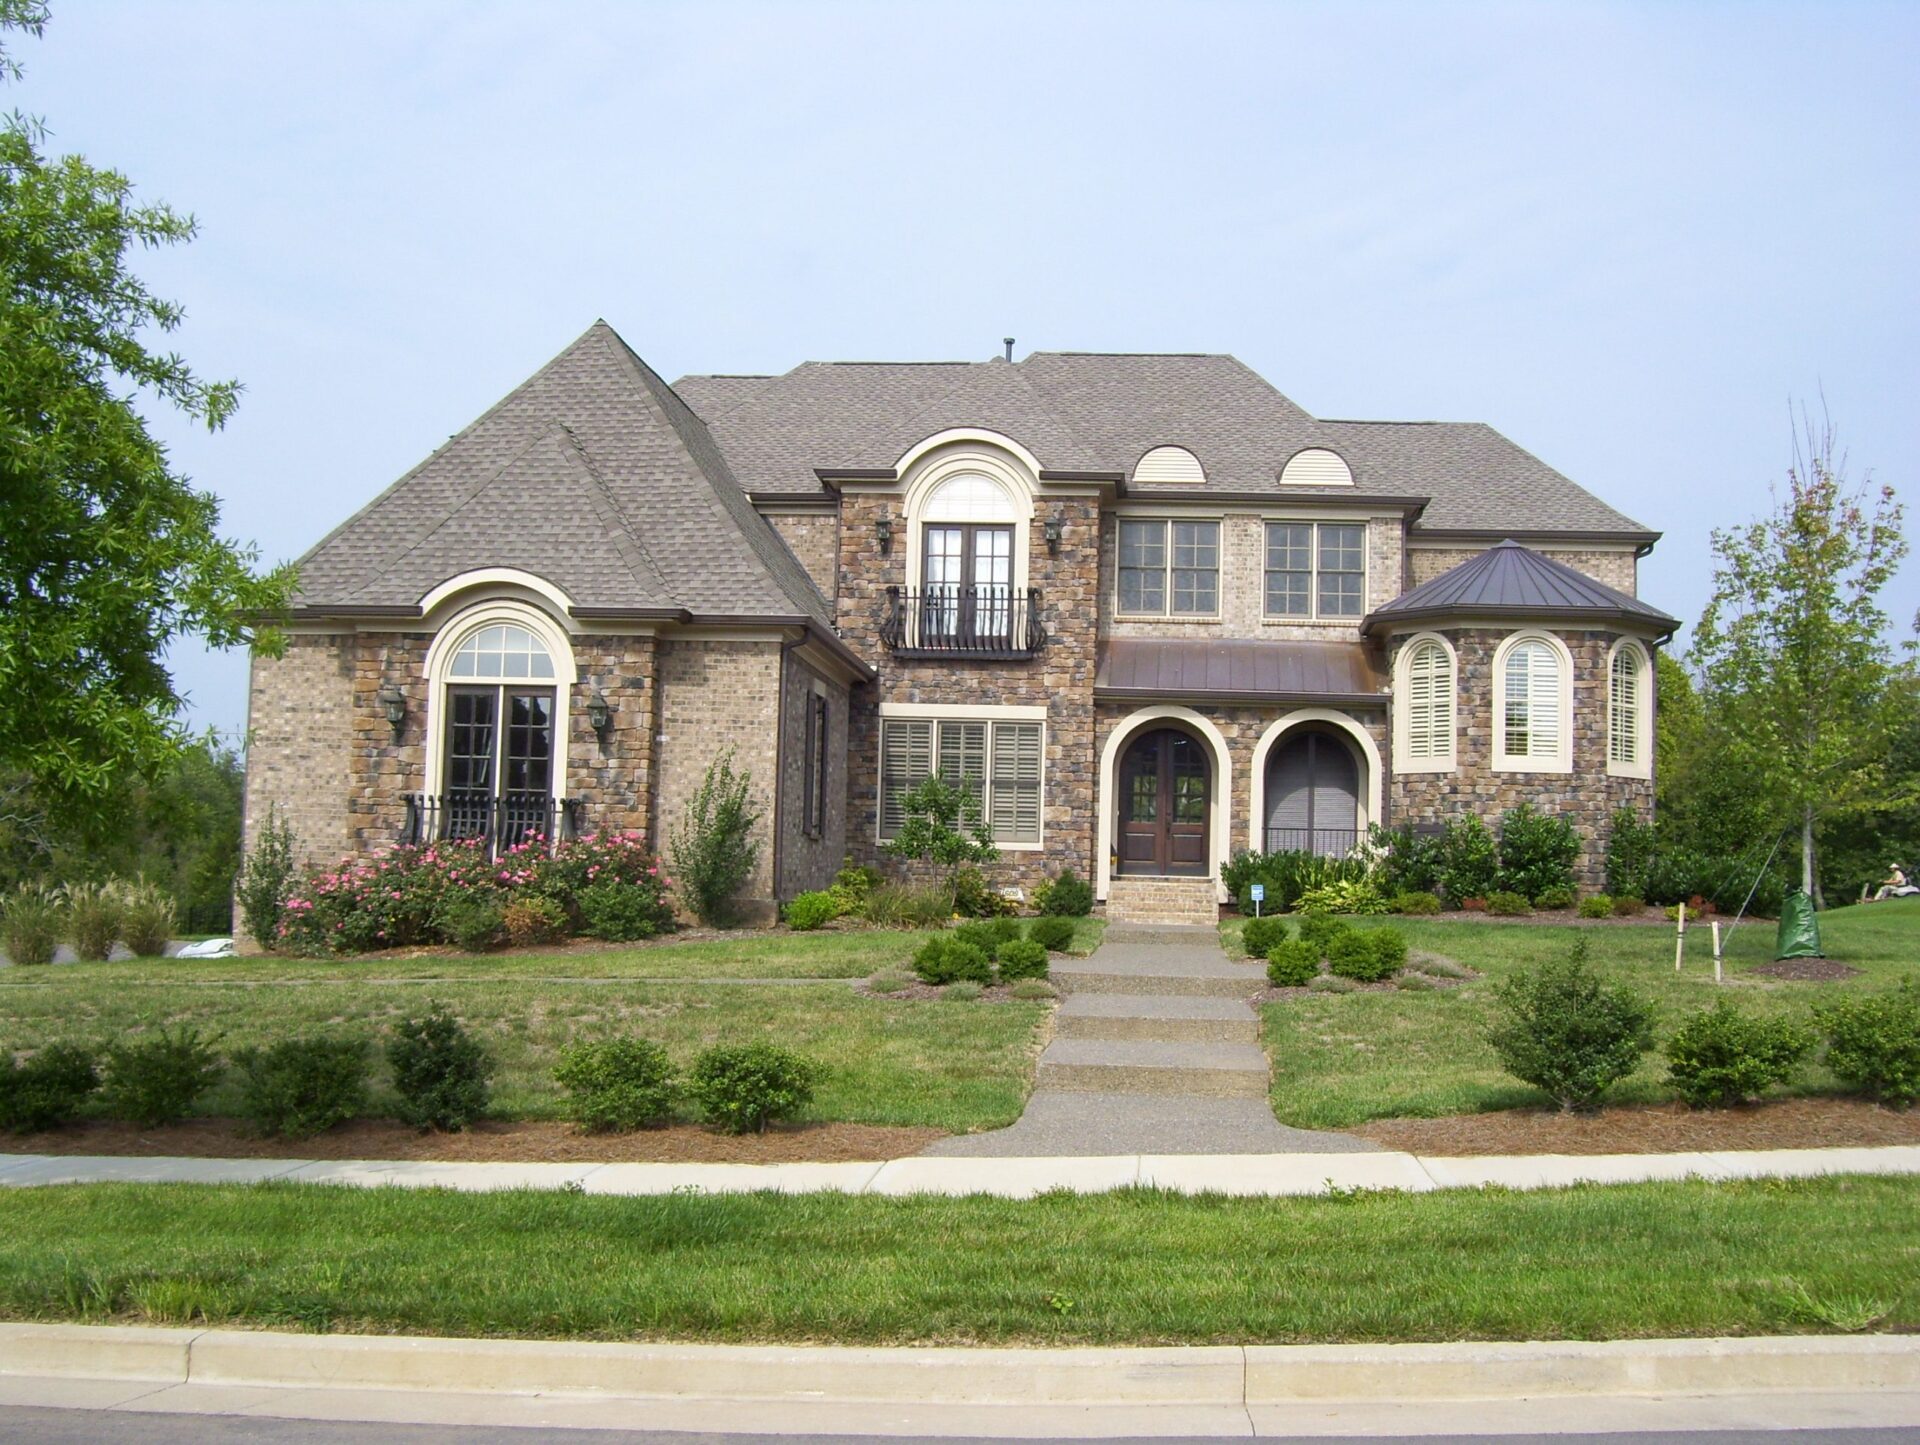 Turnberry B - Premier, High-end home builders for luxury homes - luxury home builder | Nashville, TN